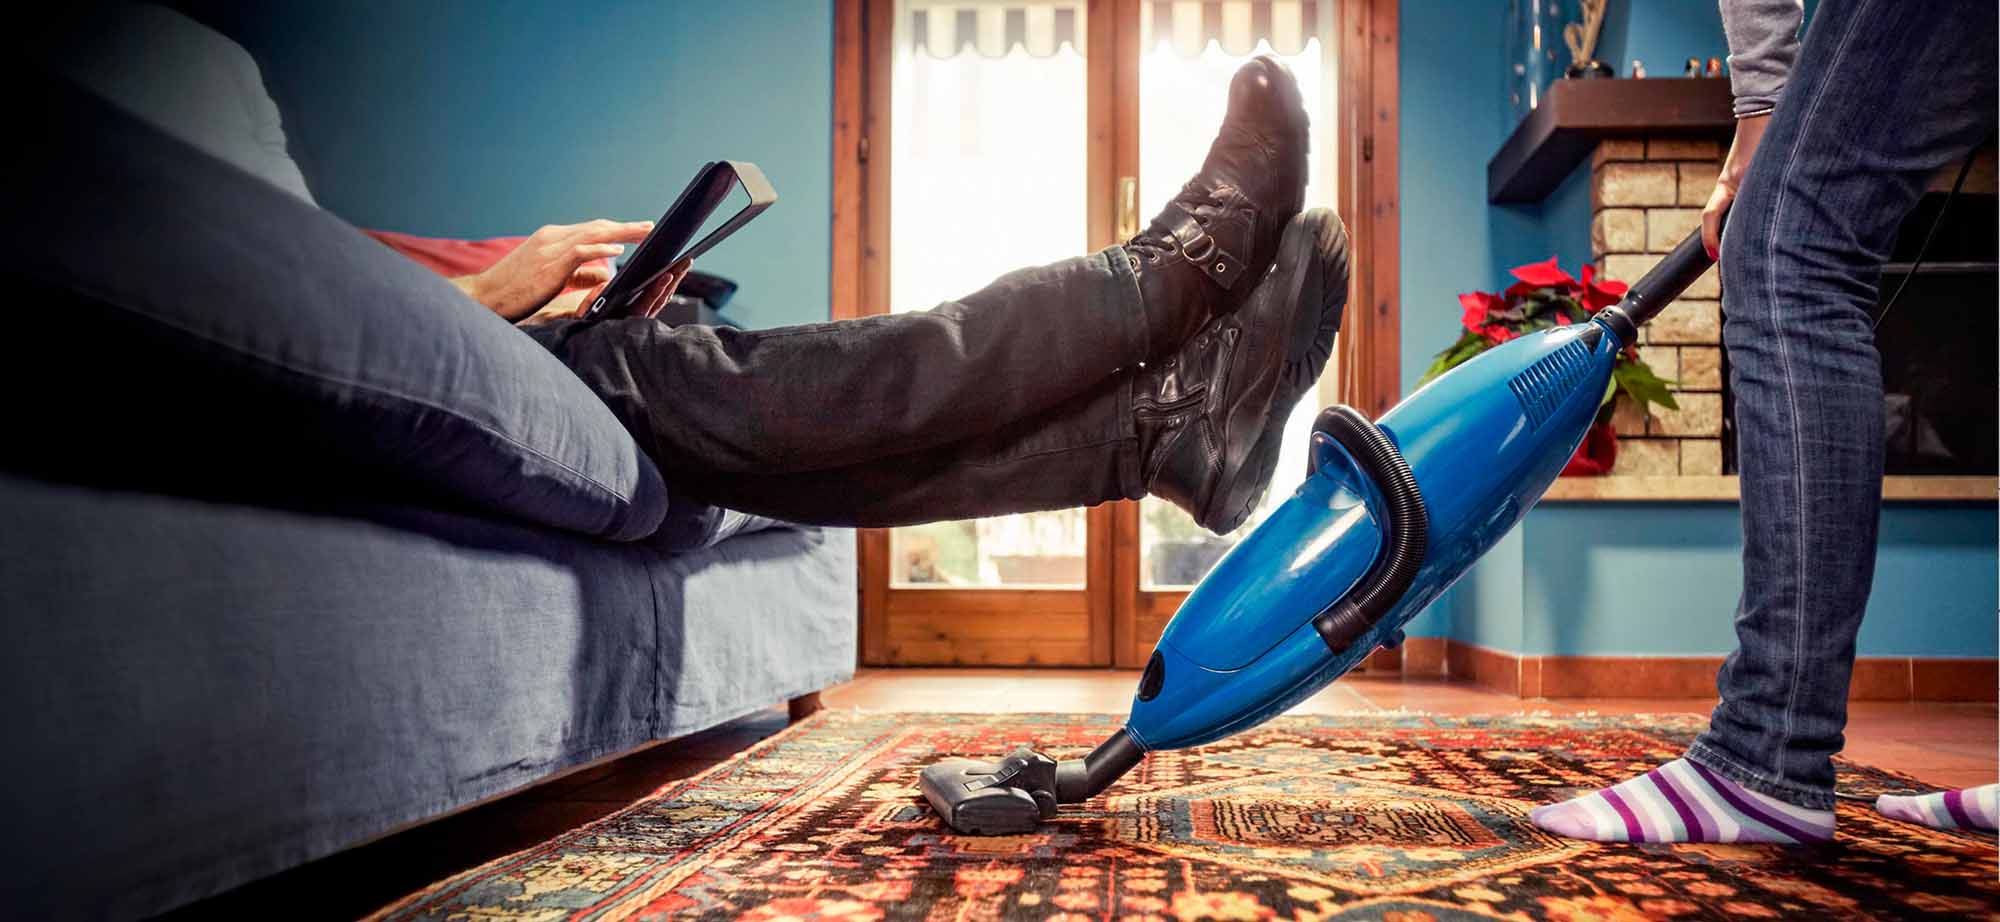 Woman vacuuming carpet under man's feet held up on sofa.